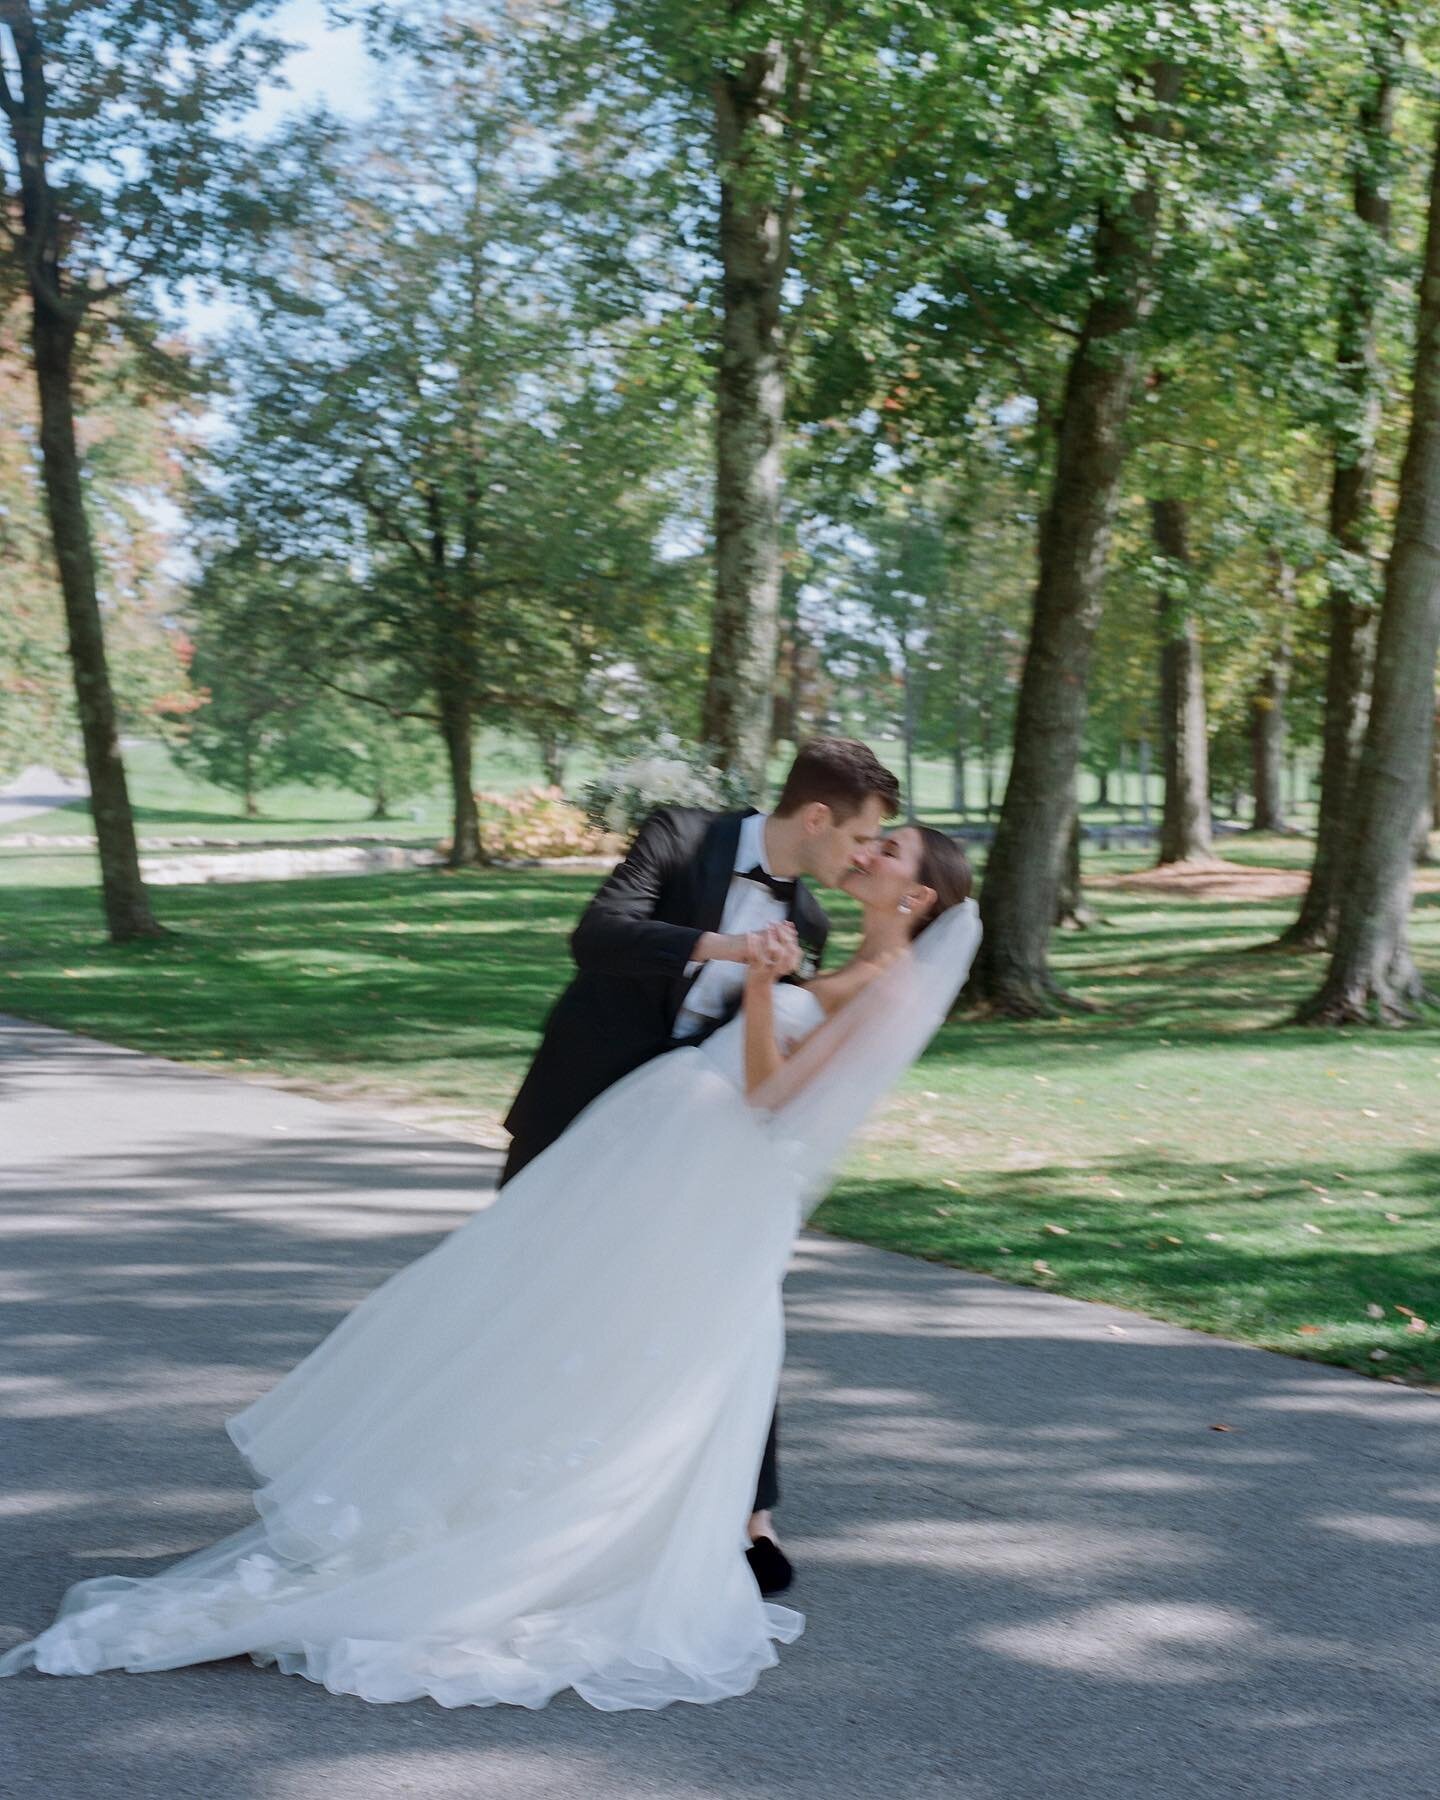 Claire and Elliot and they&rsquo;re late summer wedding on film🤍

#filmweddingphotographer #contax645 
#documentaryweddingphotographer #wildflowerfarm #alwaysauberge